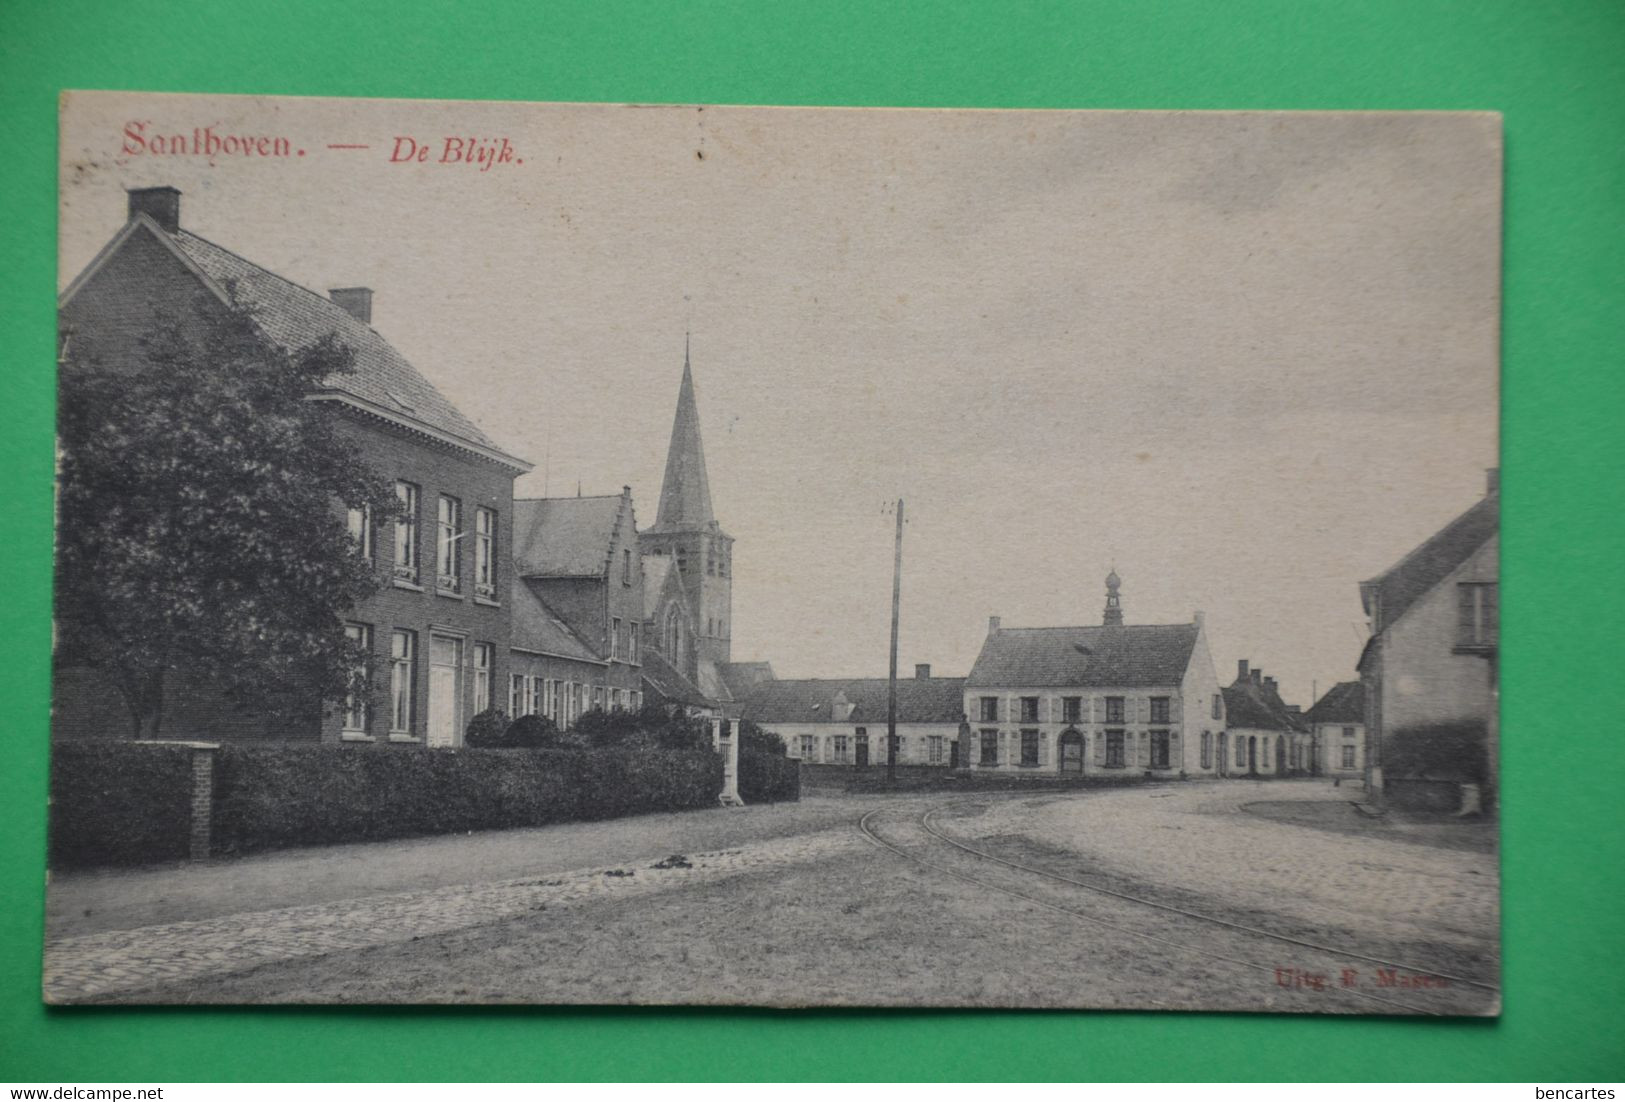 Santhoven 1908: De Blijk - Zandhoven